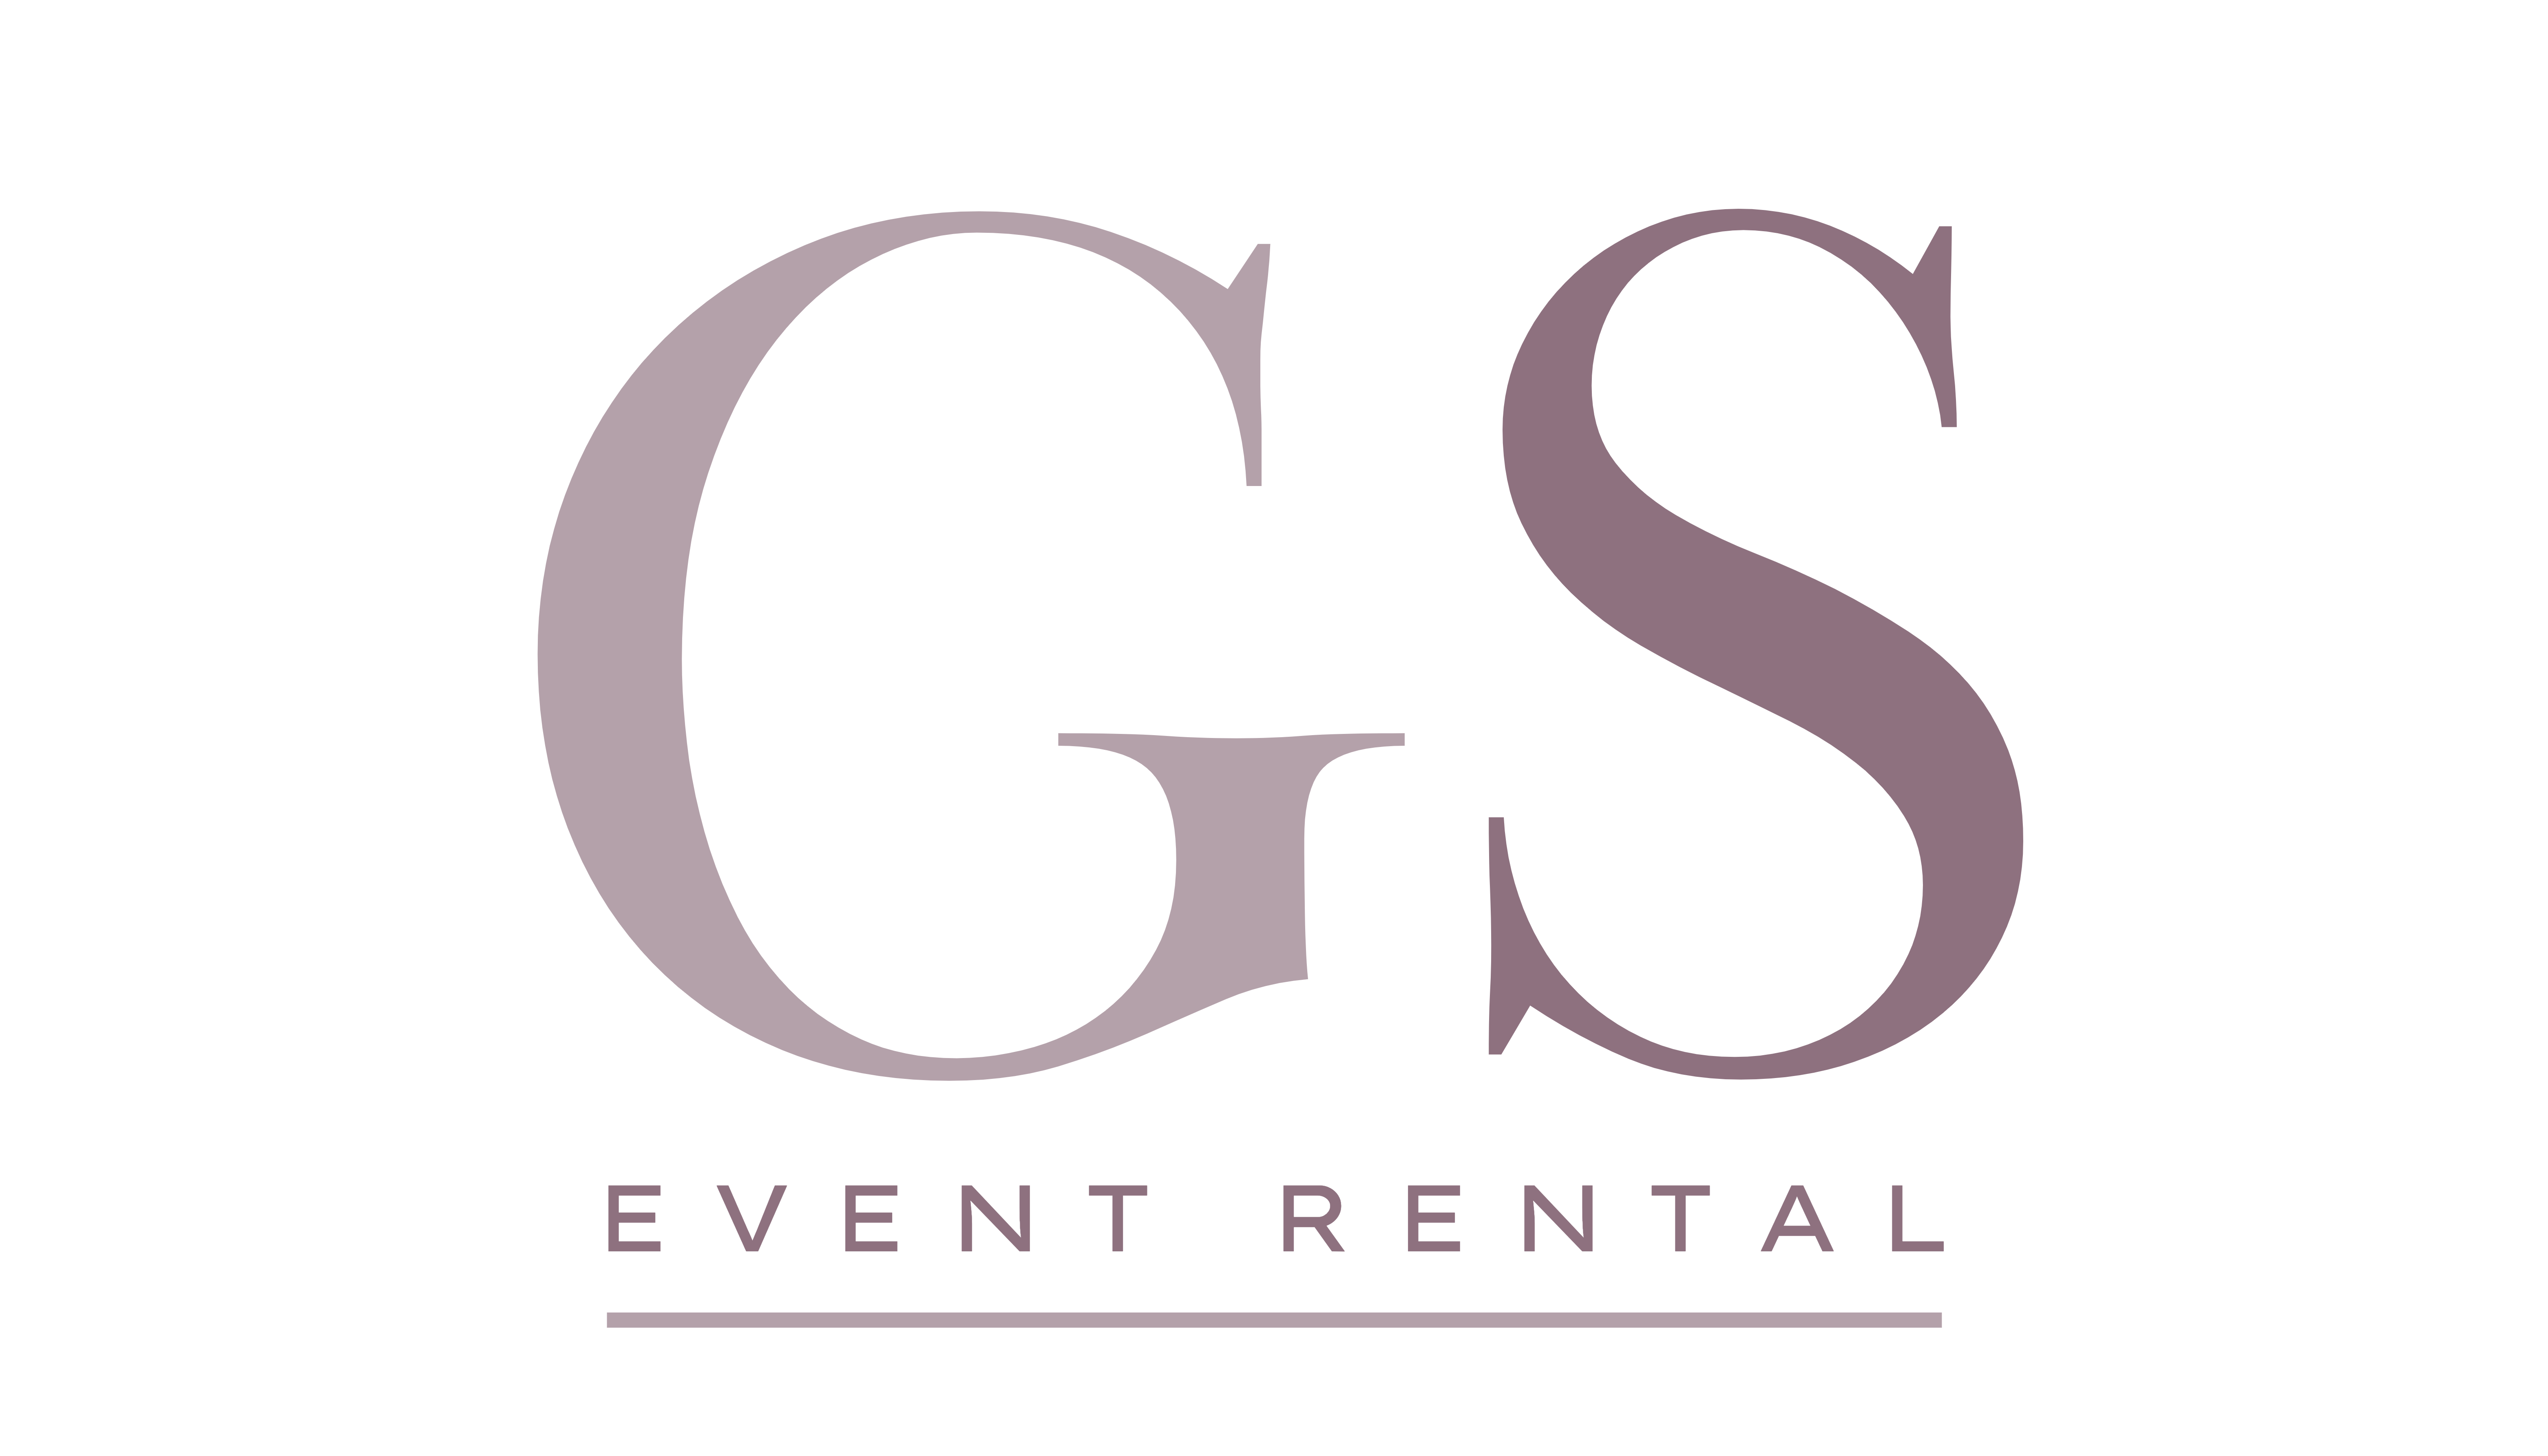 G S Event Rental logo